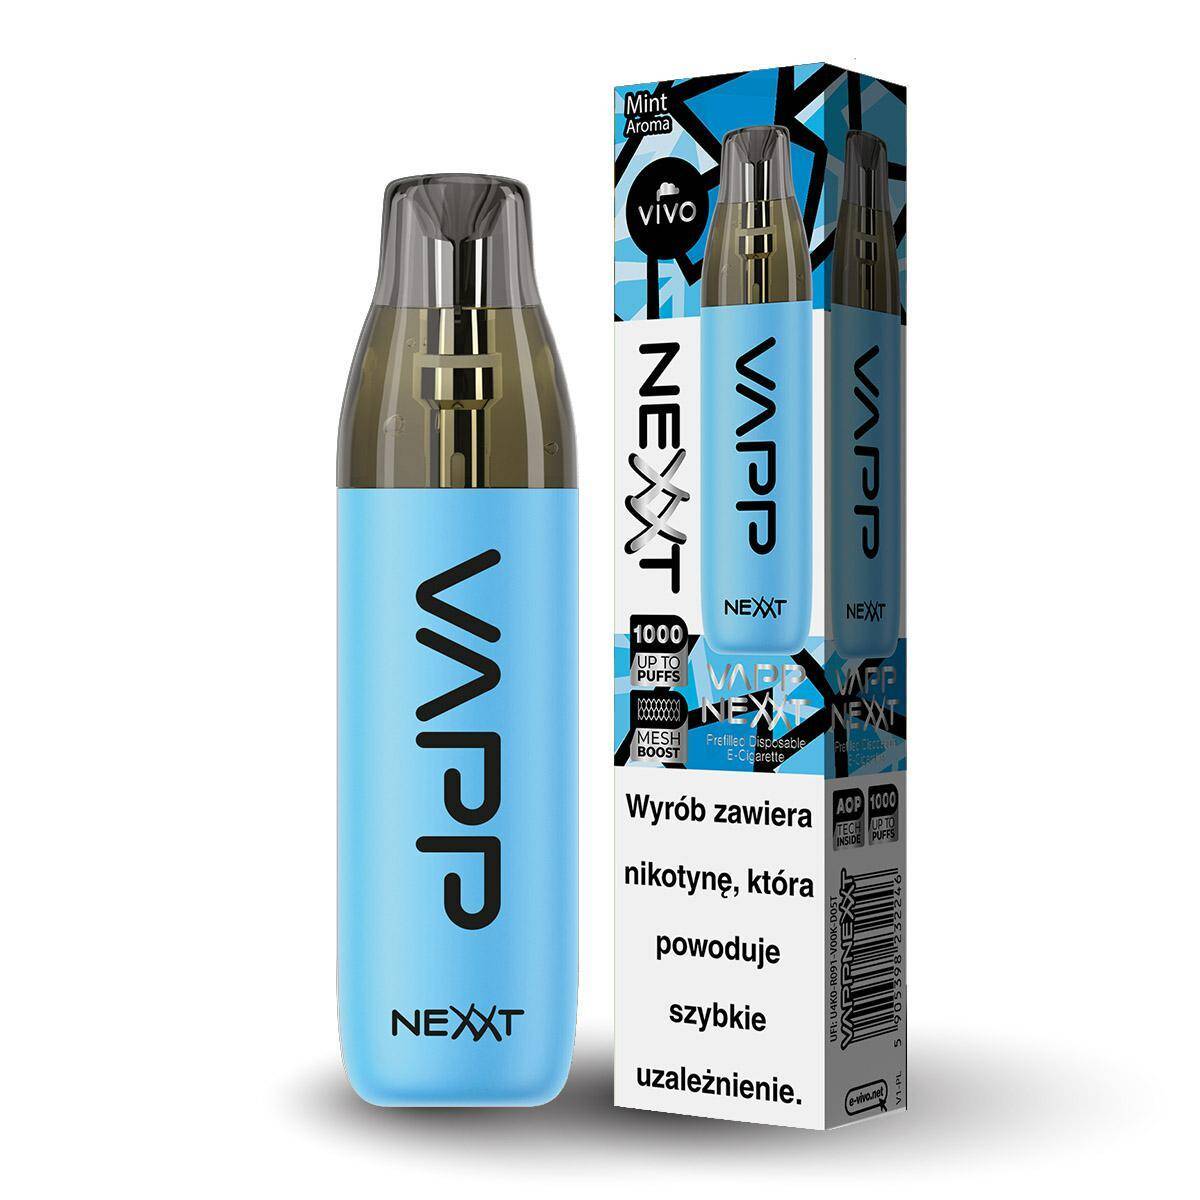 Disposable e-cigarette VIVO Nexxt - Mint 20mg